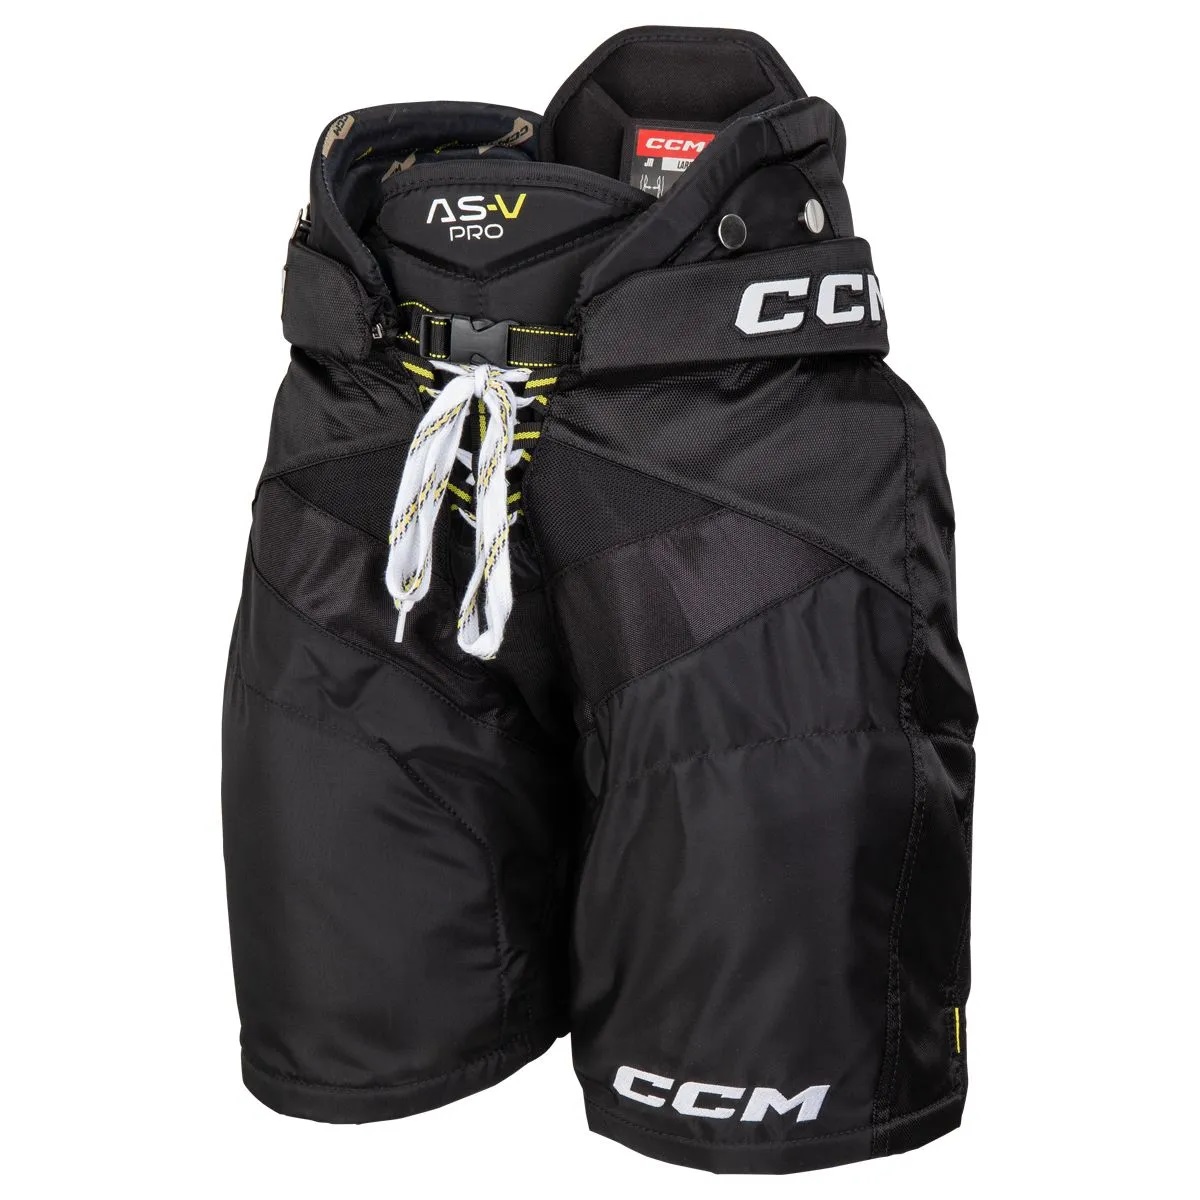 CCM Tacks AS-V Pro Jr. Hockey Pantsproduct zoom image #1